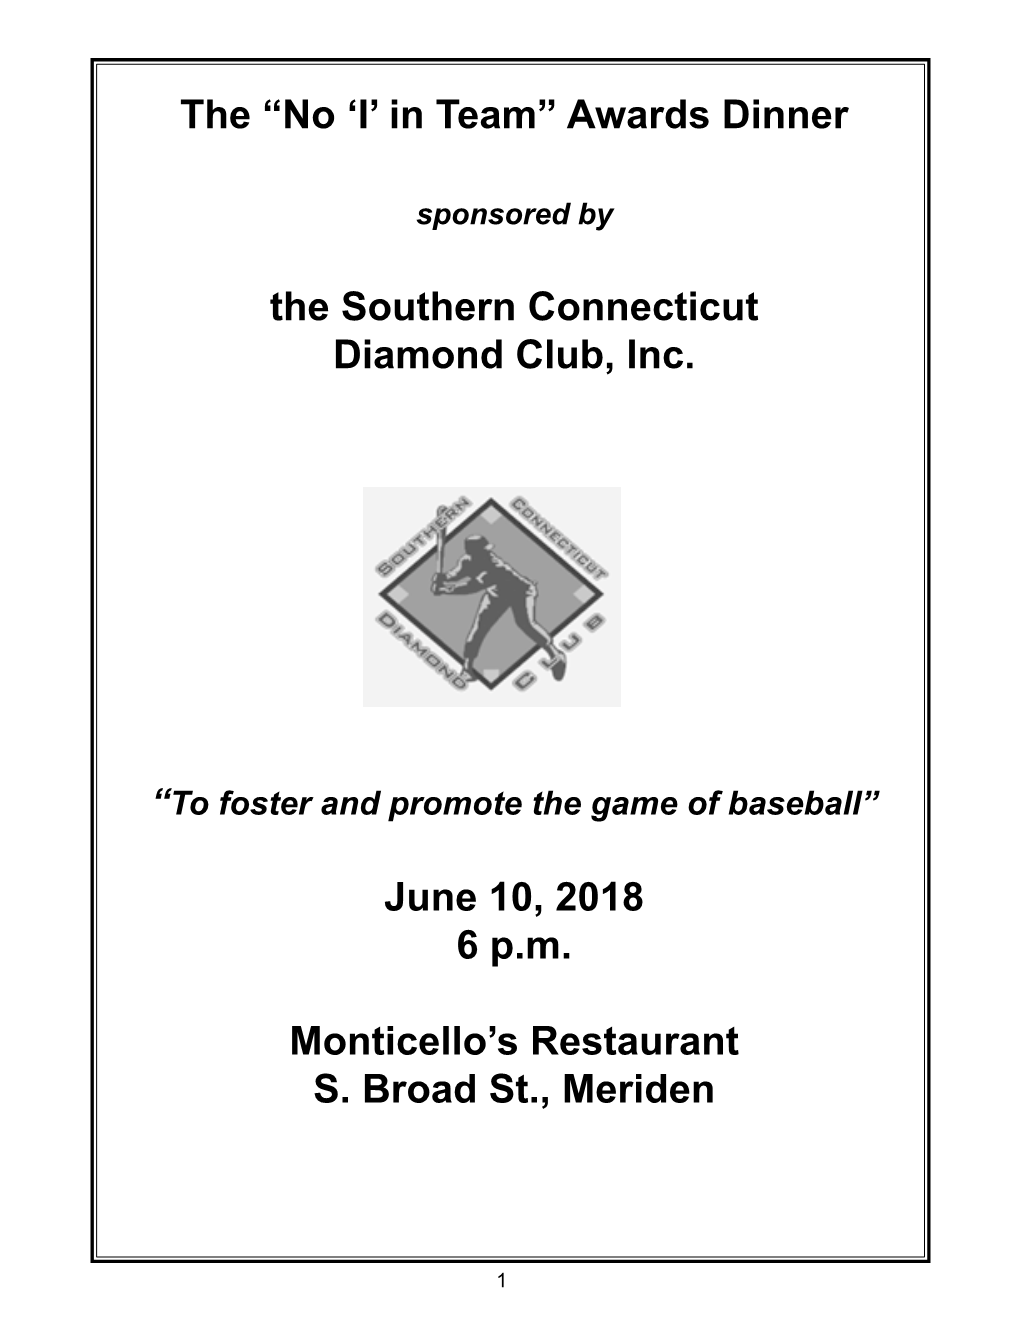 Awards Dinner the Southern Connecticut Diamond Club, Inc